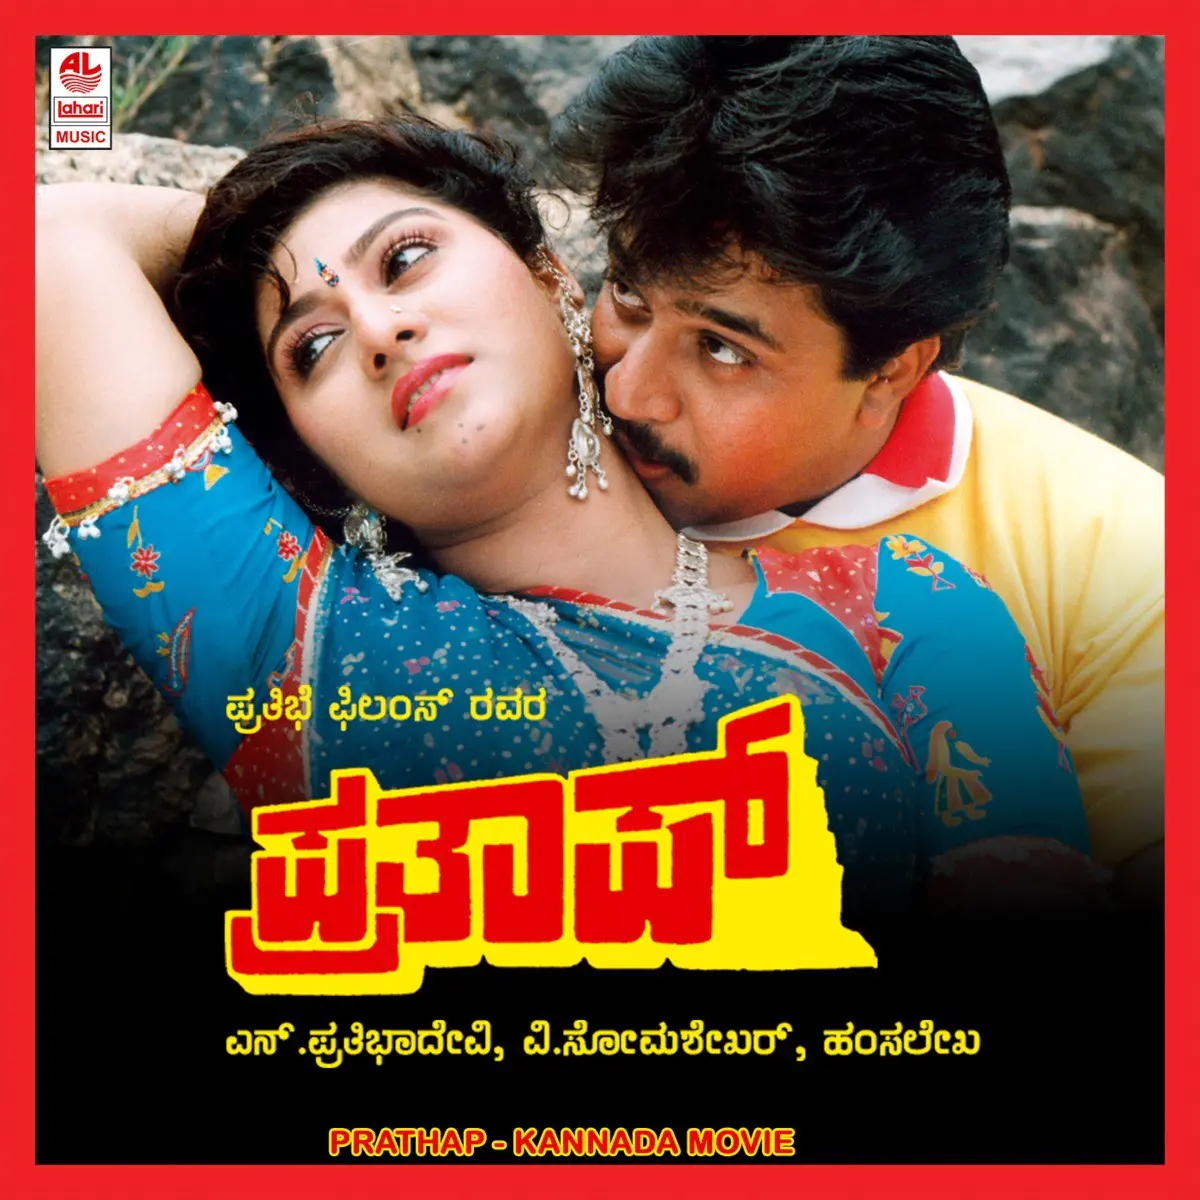 Prathap Songs Download: Prathap MP3 Kannada Songs Online Free on Gaana.com